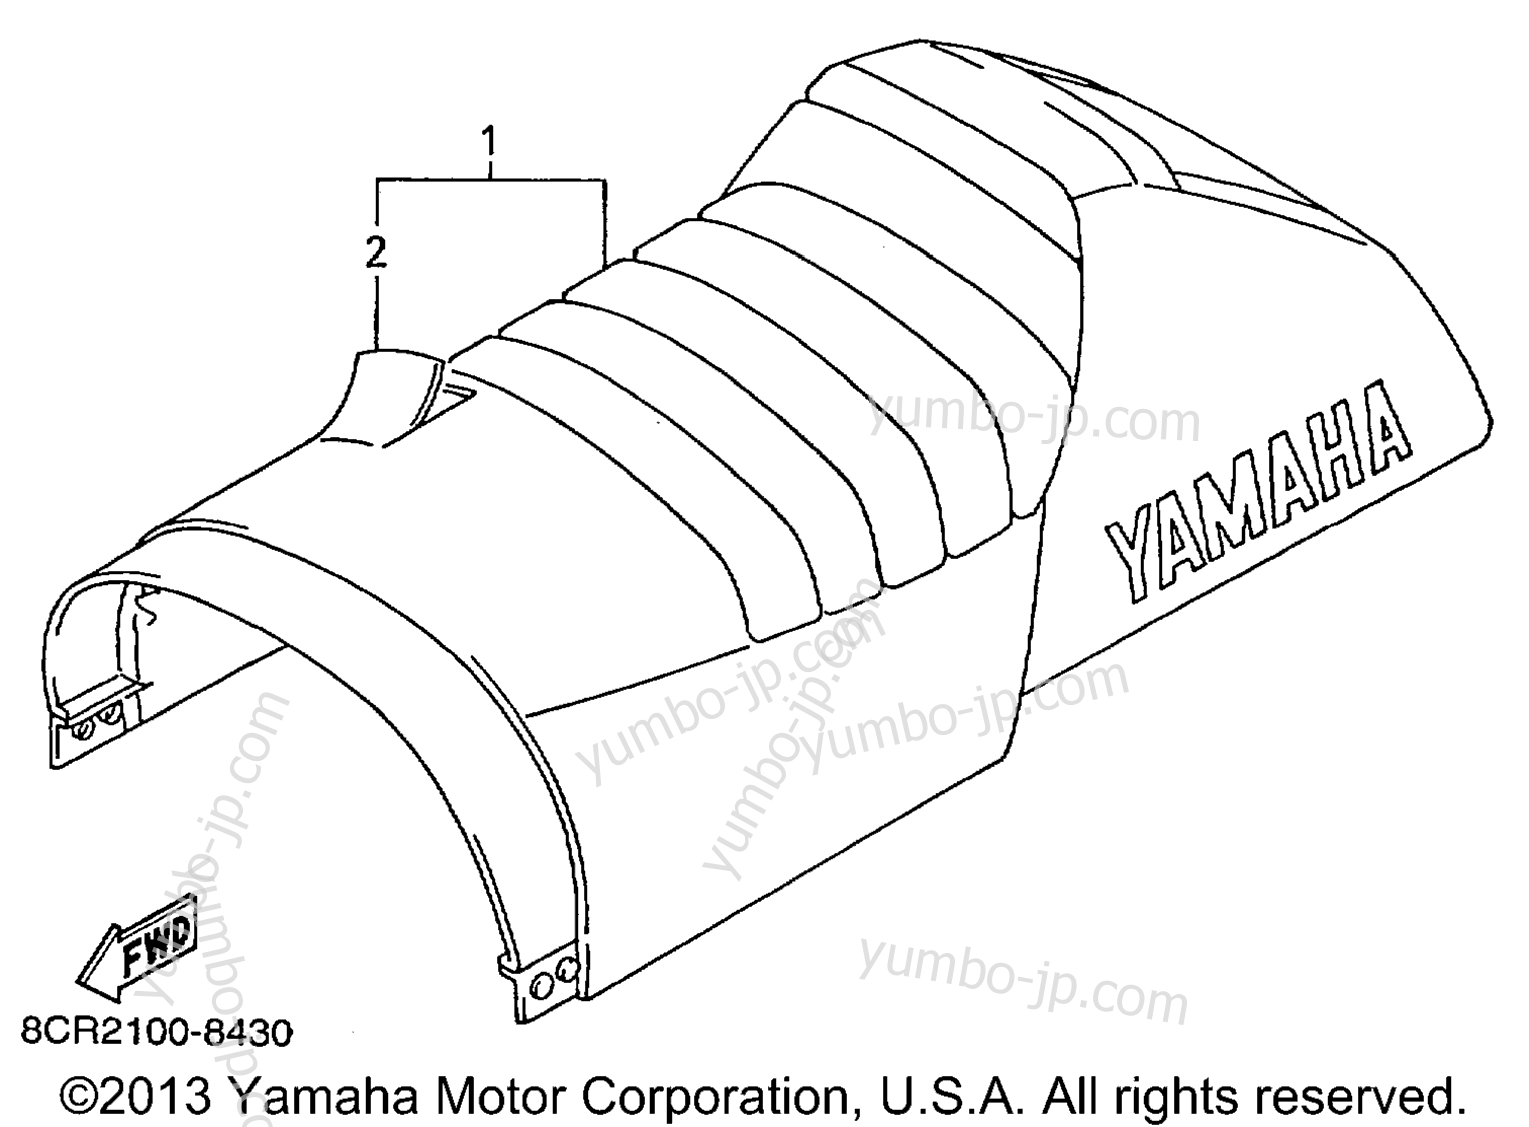 Alternate Single Seat Assy for snowmobiles YAMAHA VMAX 700 XTCP (PLASTIC SKI, 1.5"TRACK) (VX700XTCPB) 1998 year